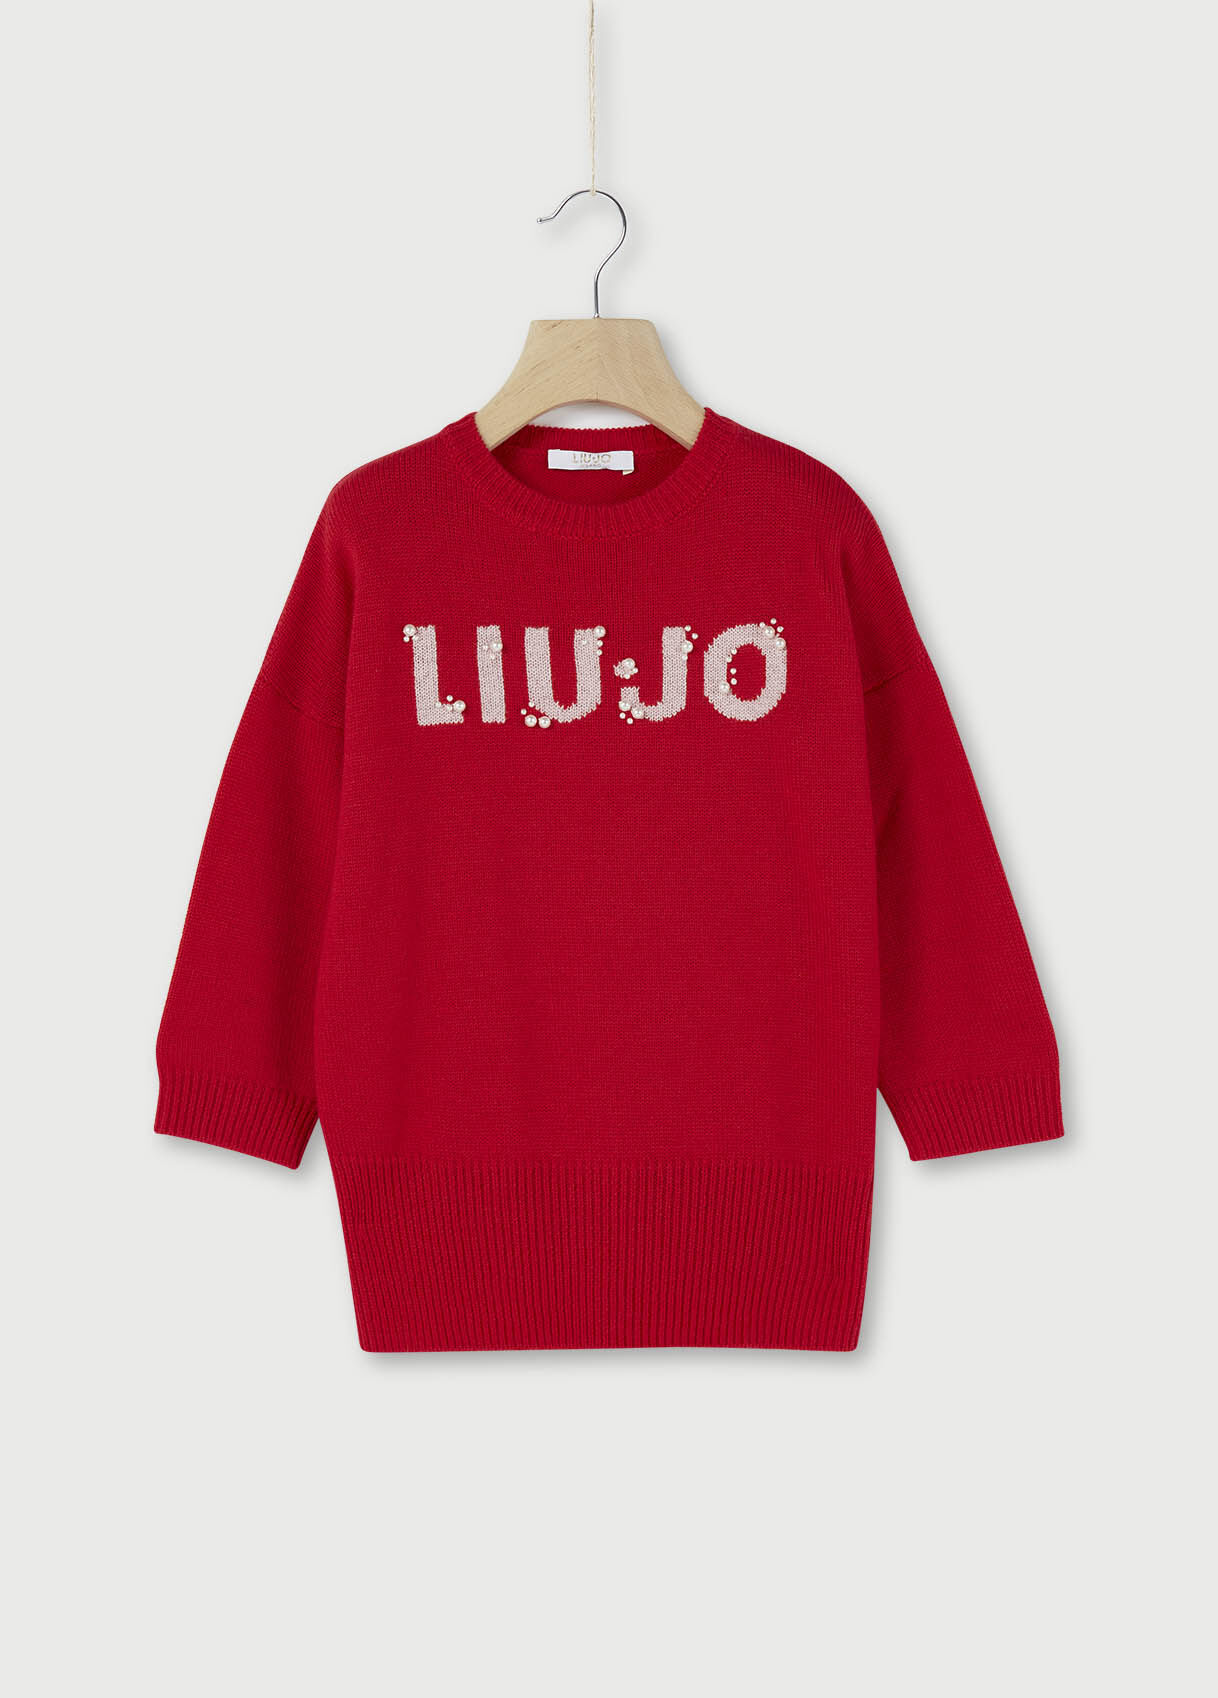 Abbigliamento bambina (18 mesi - 7 anni) | shop online LIU JO